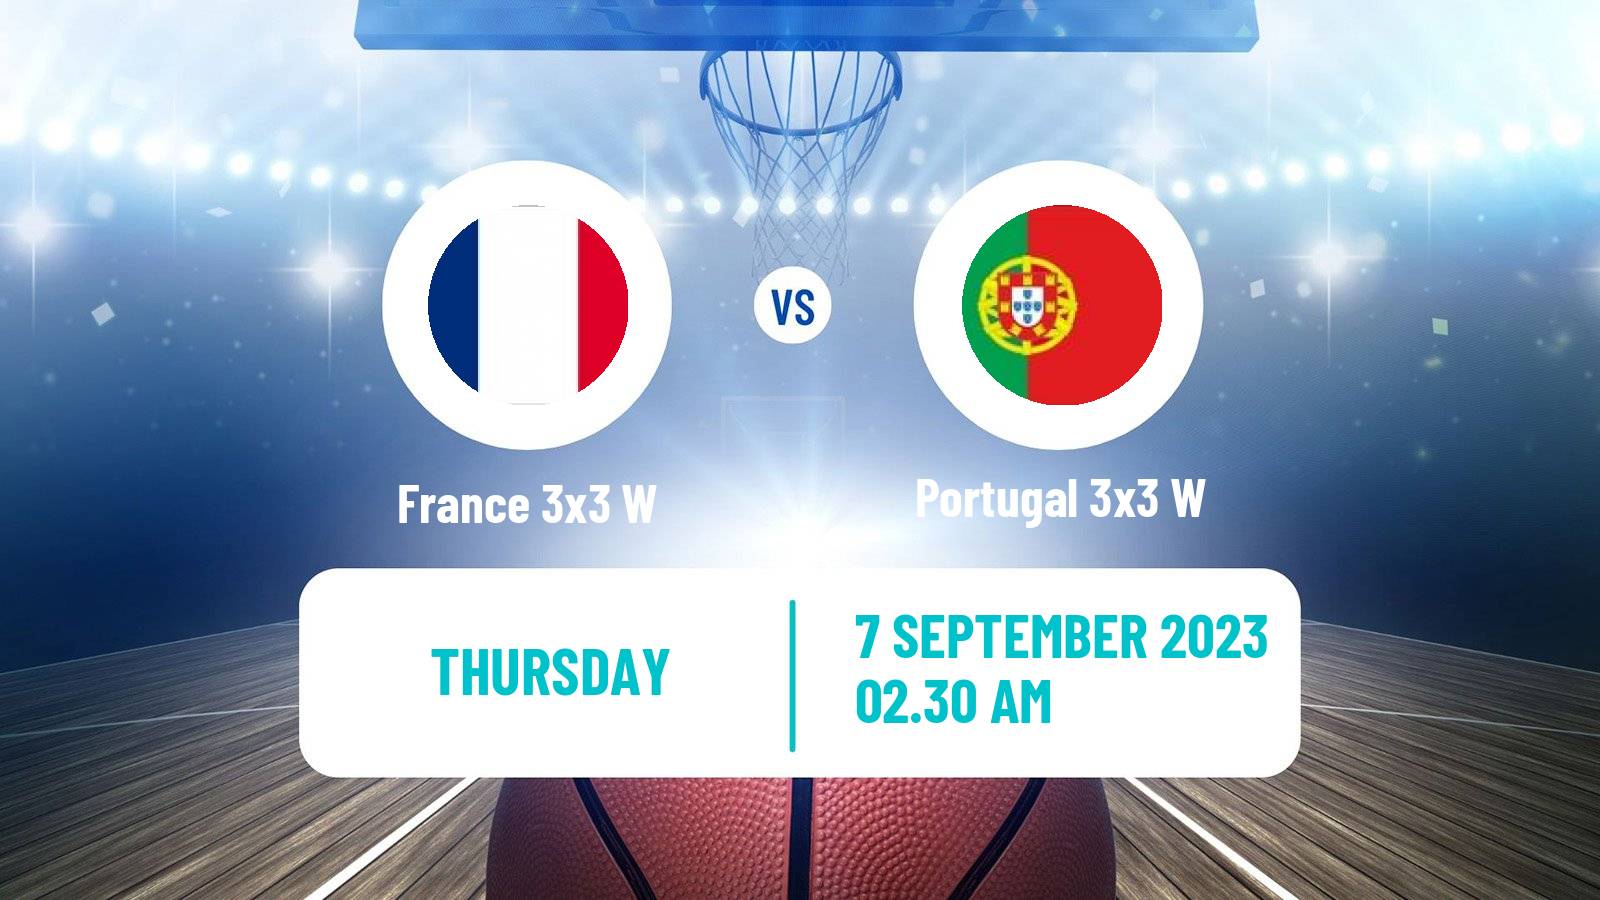 Basketball Europe Cup Basketball 3x3 Women France 3x3 W - Portugal 3x3 W